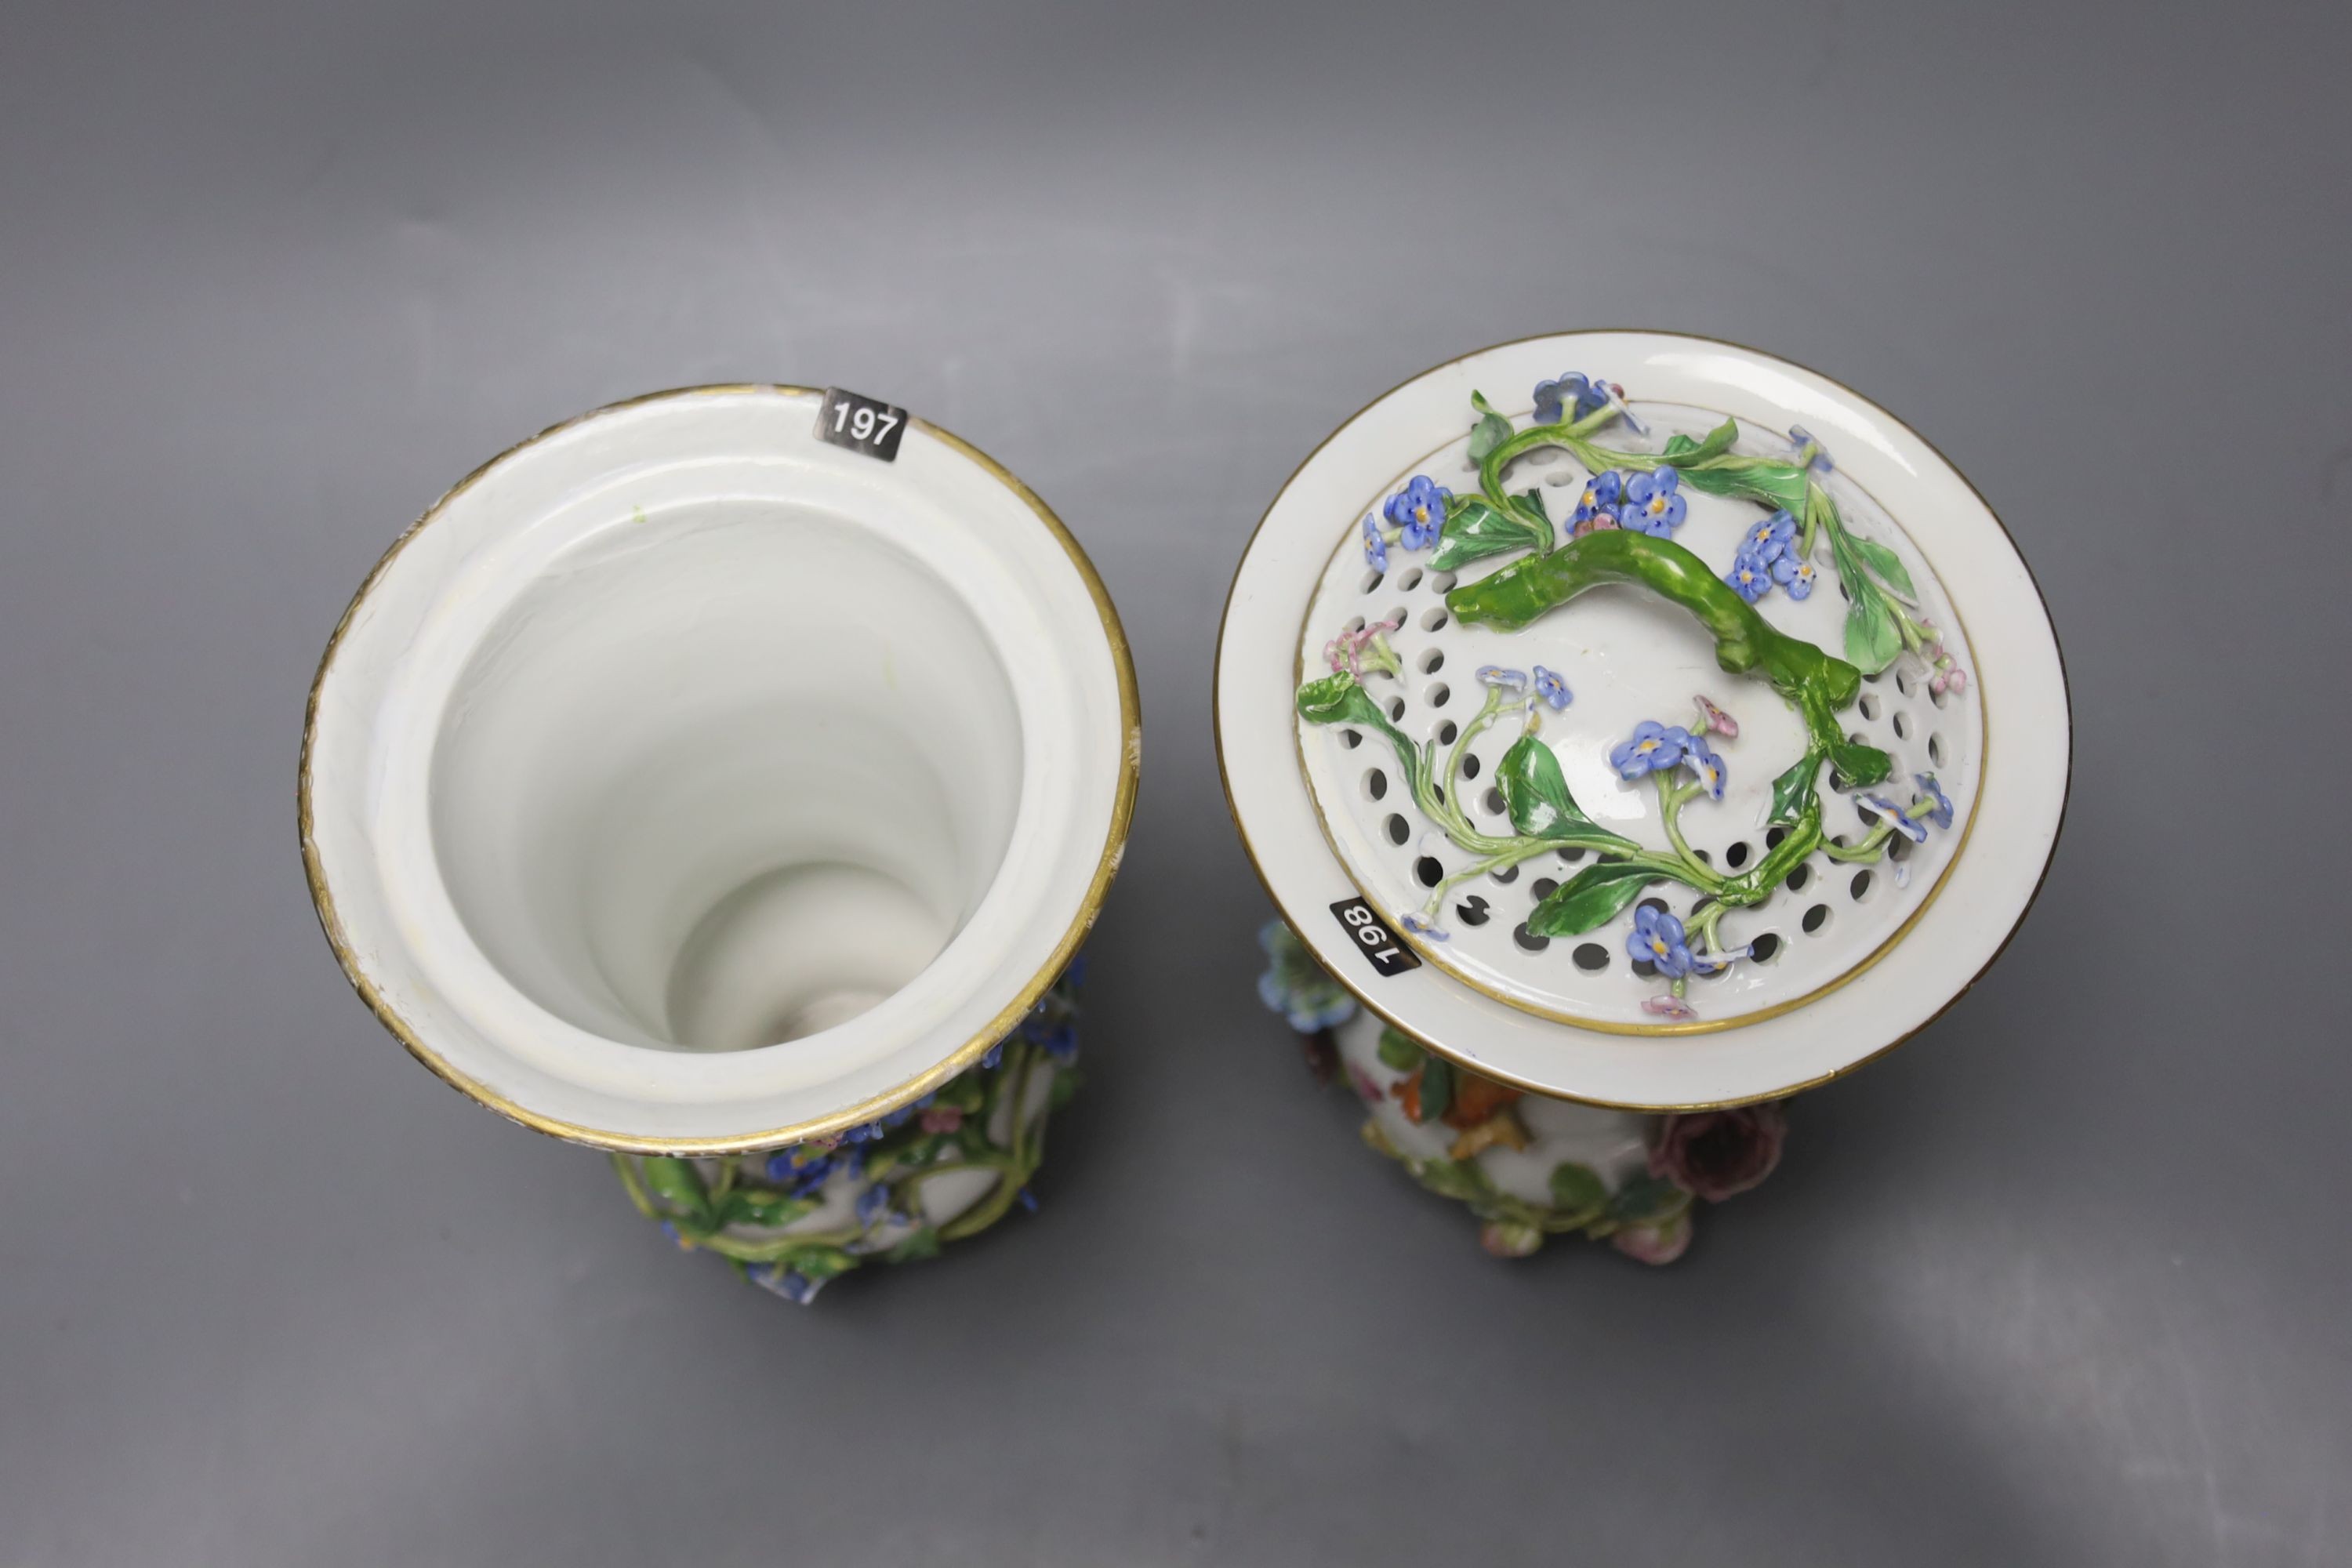 Two similar 19th century Meissen pot pourri vases and one cover, tallest 20cm